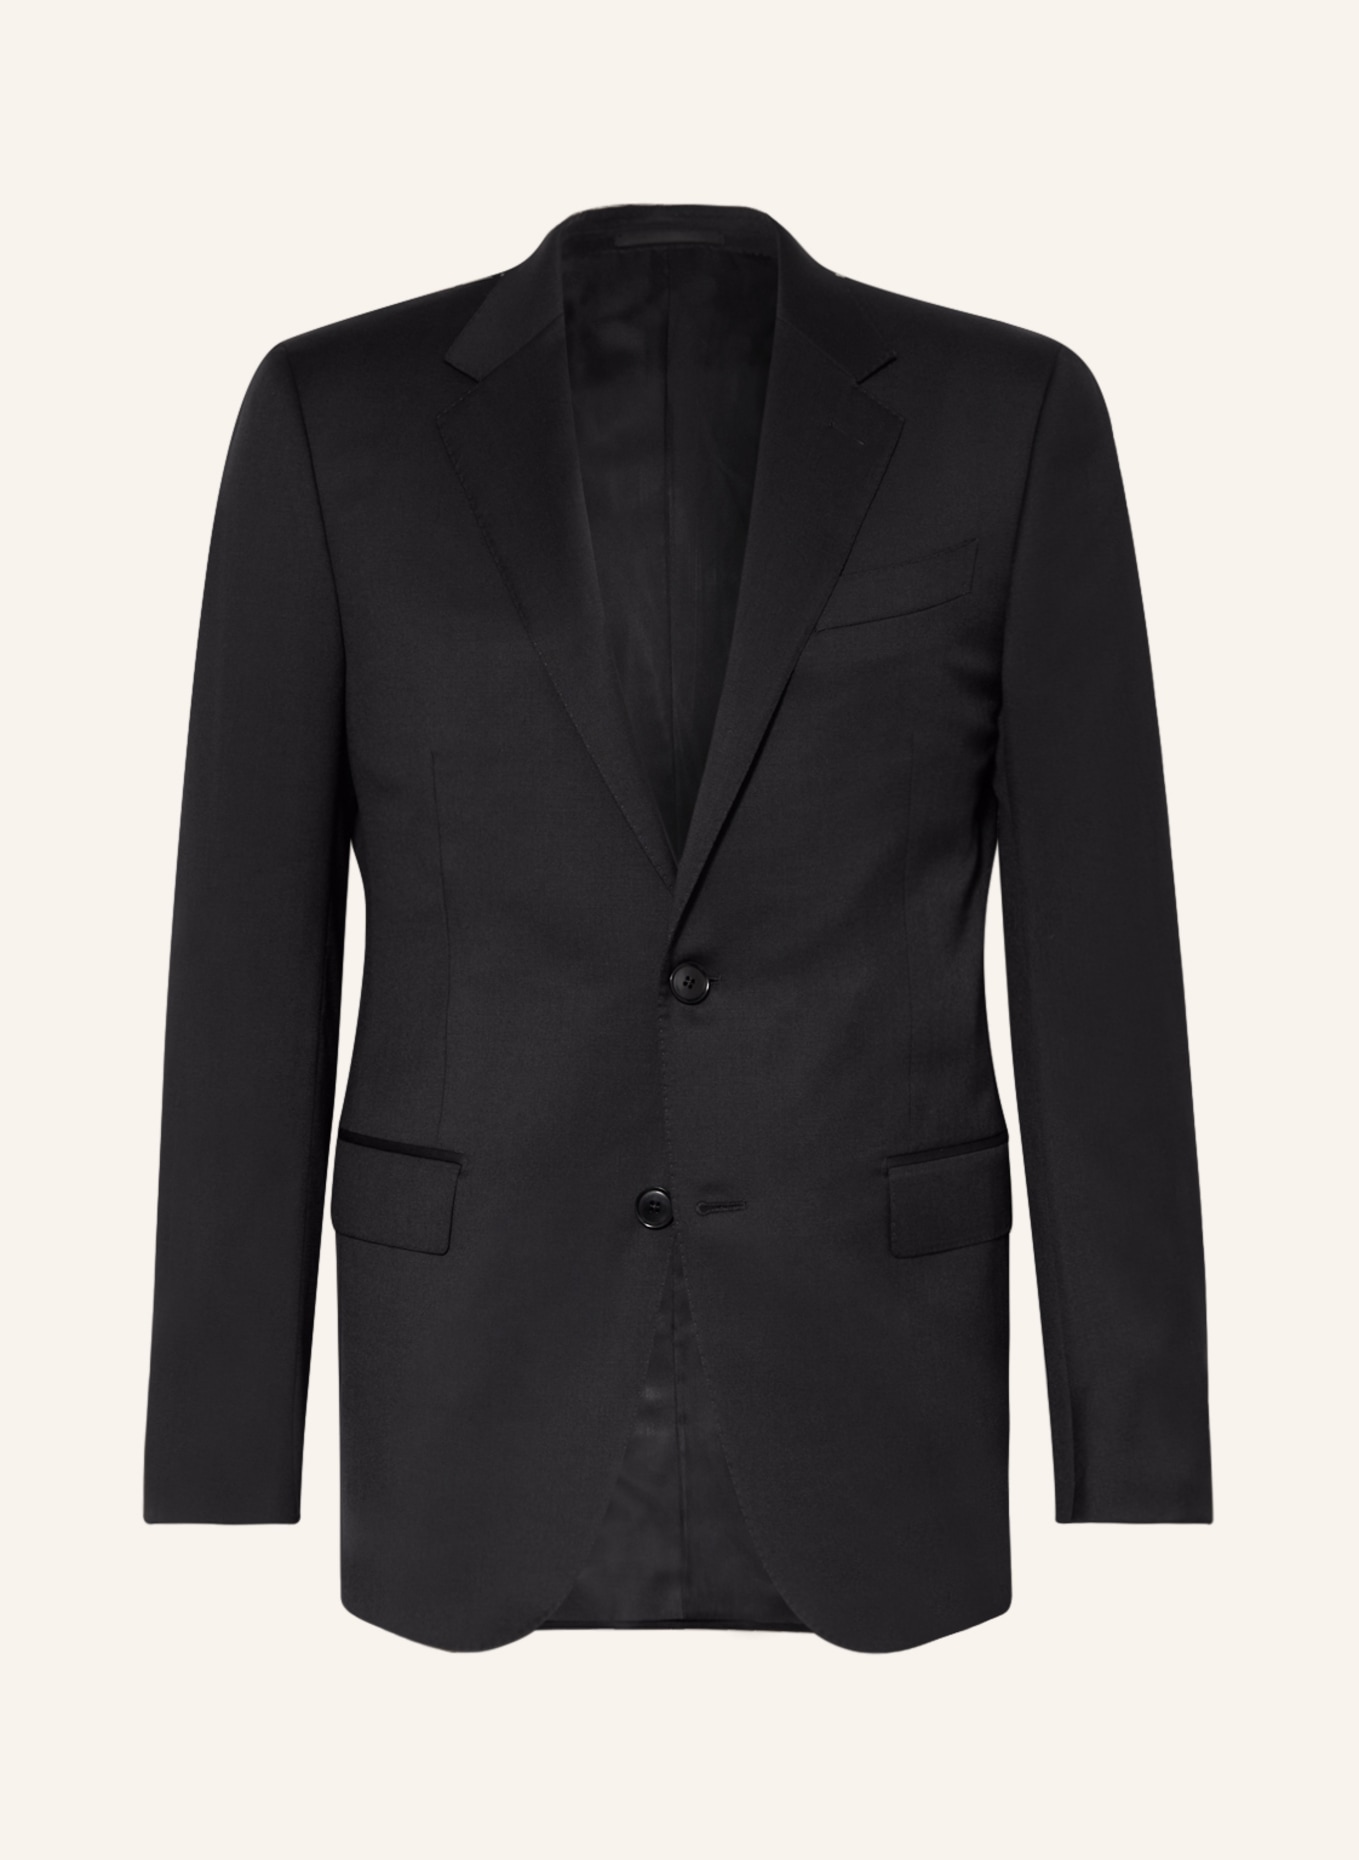 ZEGNA Anzugsakko MILANO Slim Fit, Farbe: 525 BLACK (Bild 1)